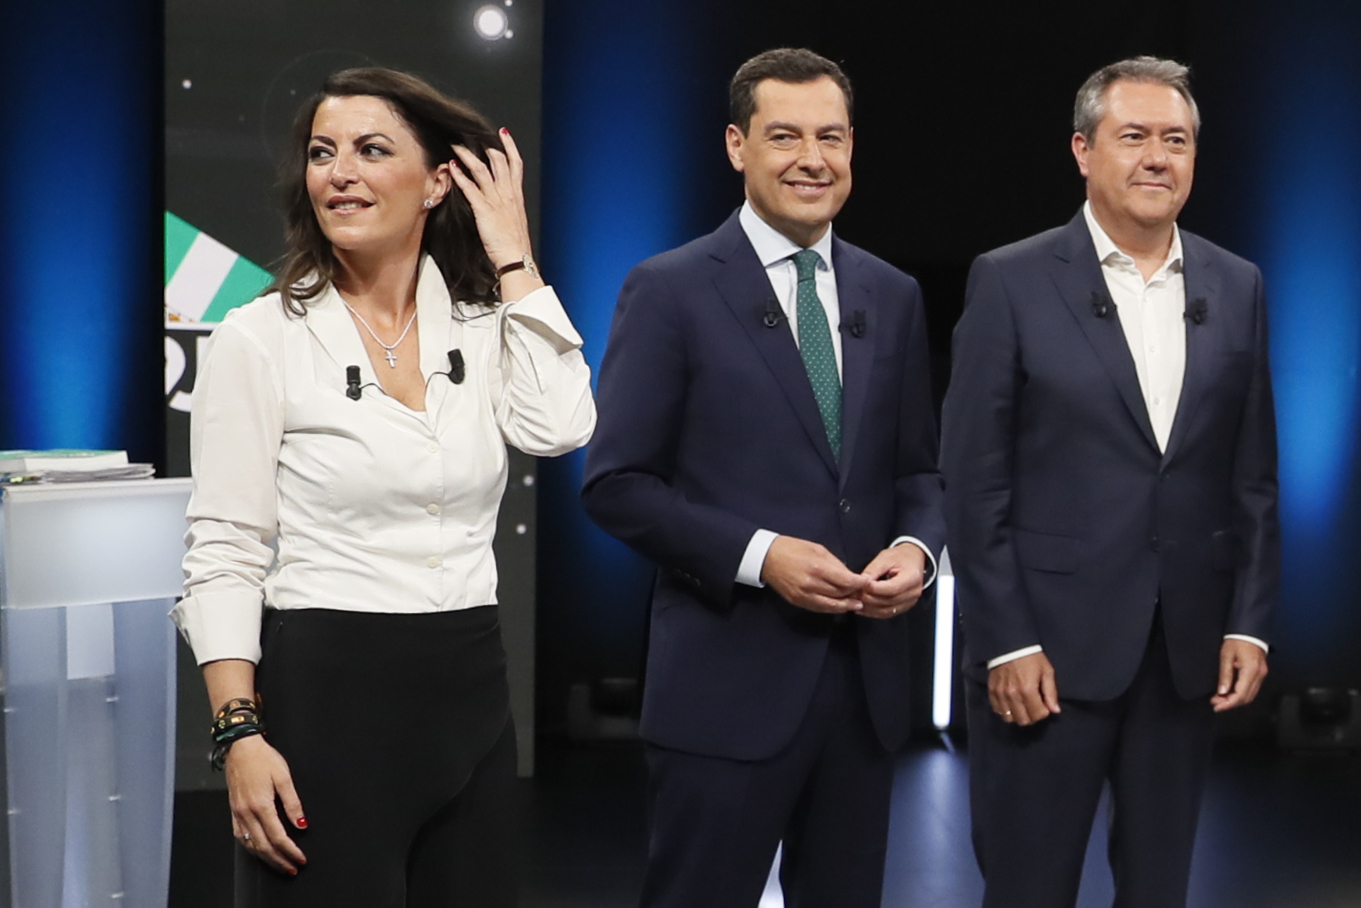 Vox, PP and PSOE candidates, Macarena Olona, ​​Juanma Moreno and Juan Espadas, just moments before starting the debate on TVE,